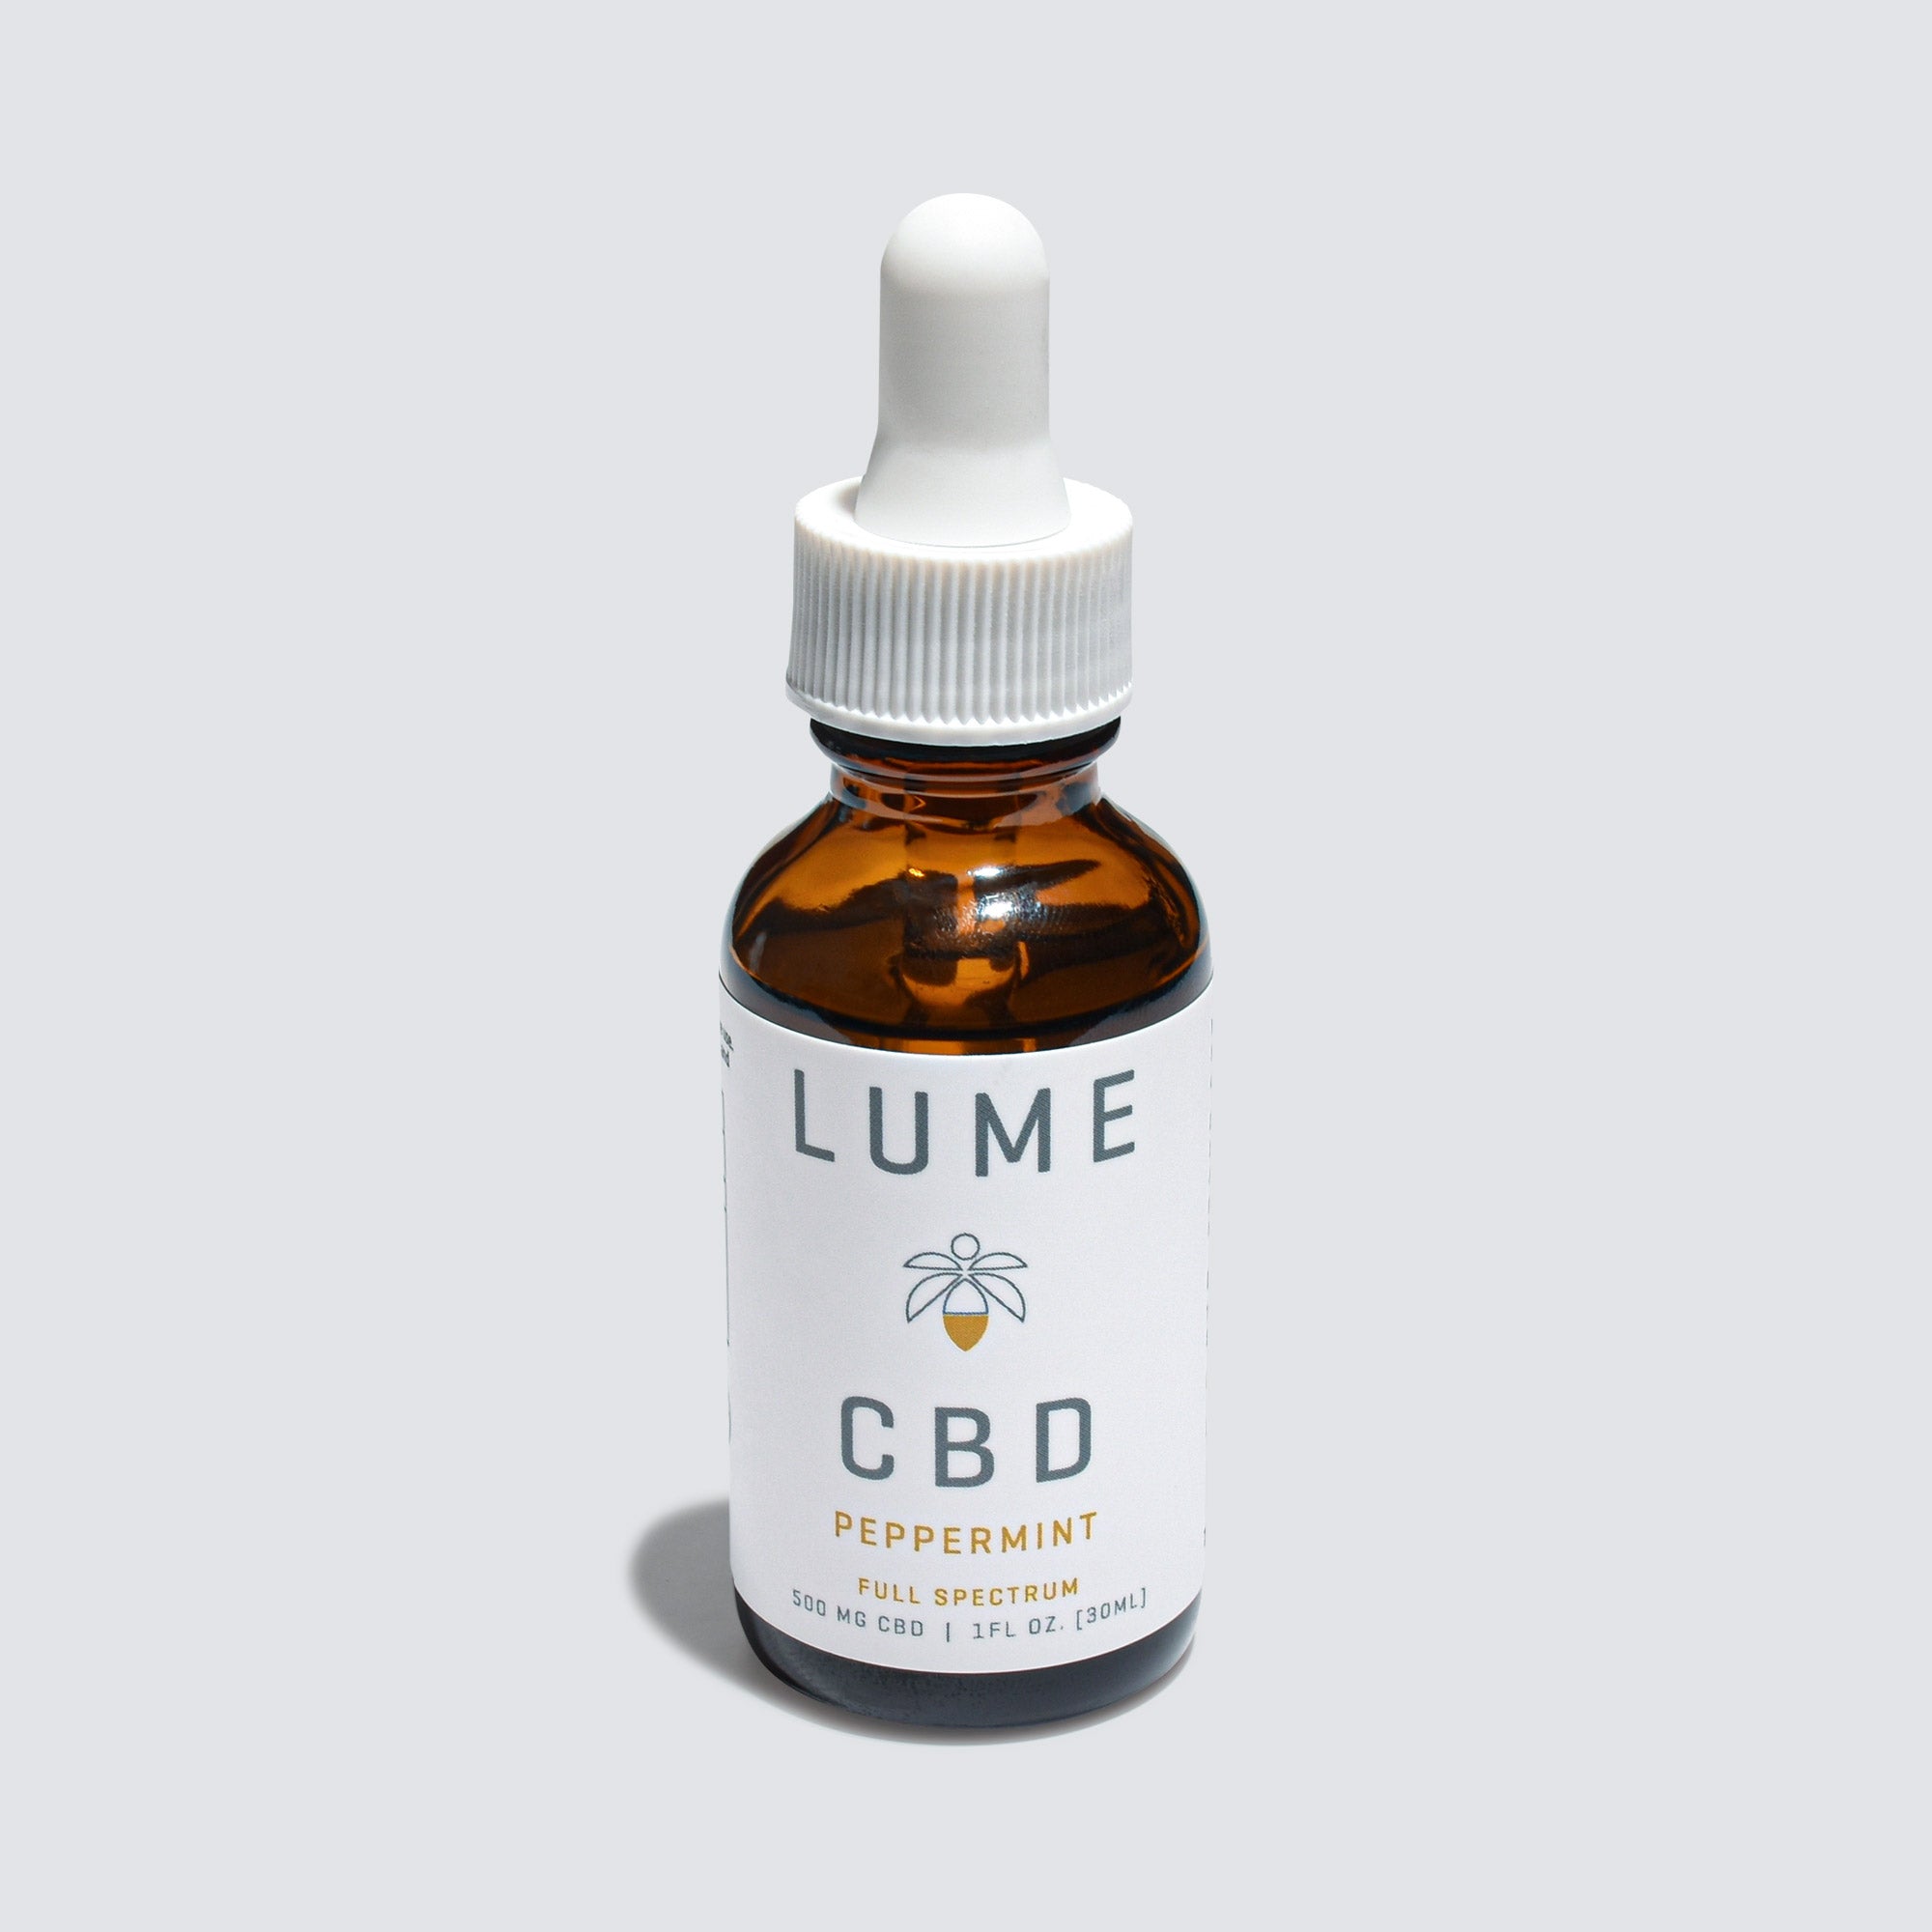 Lume 500 mg CBD tincture